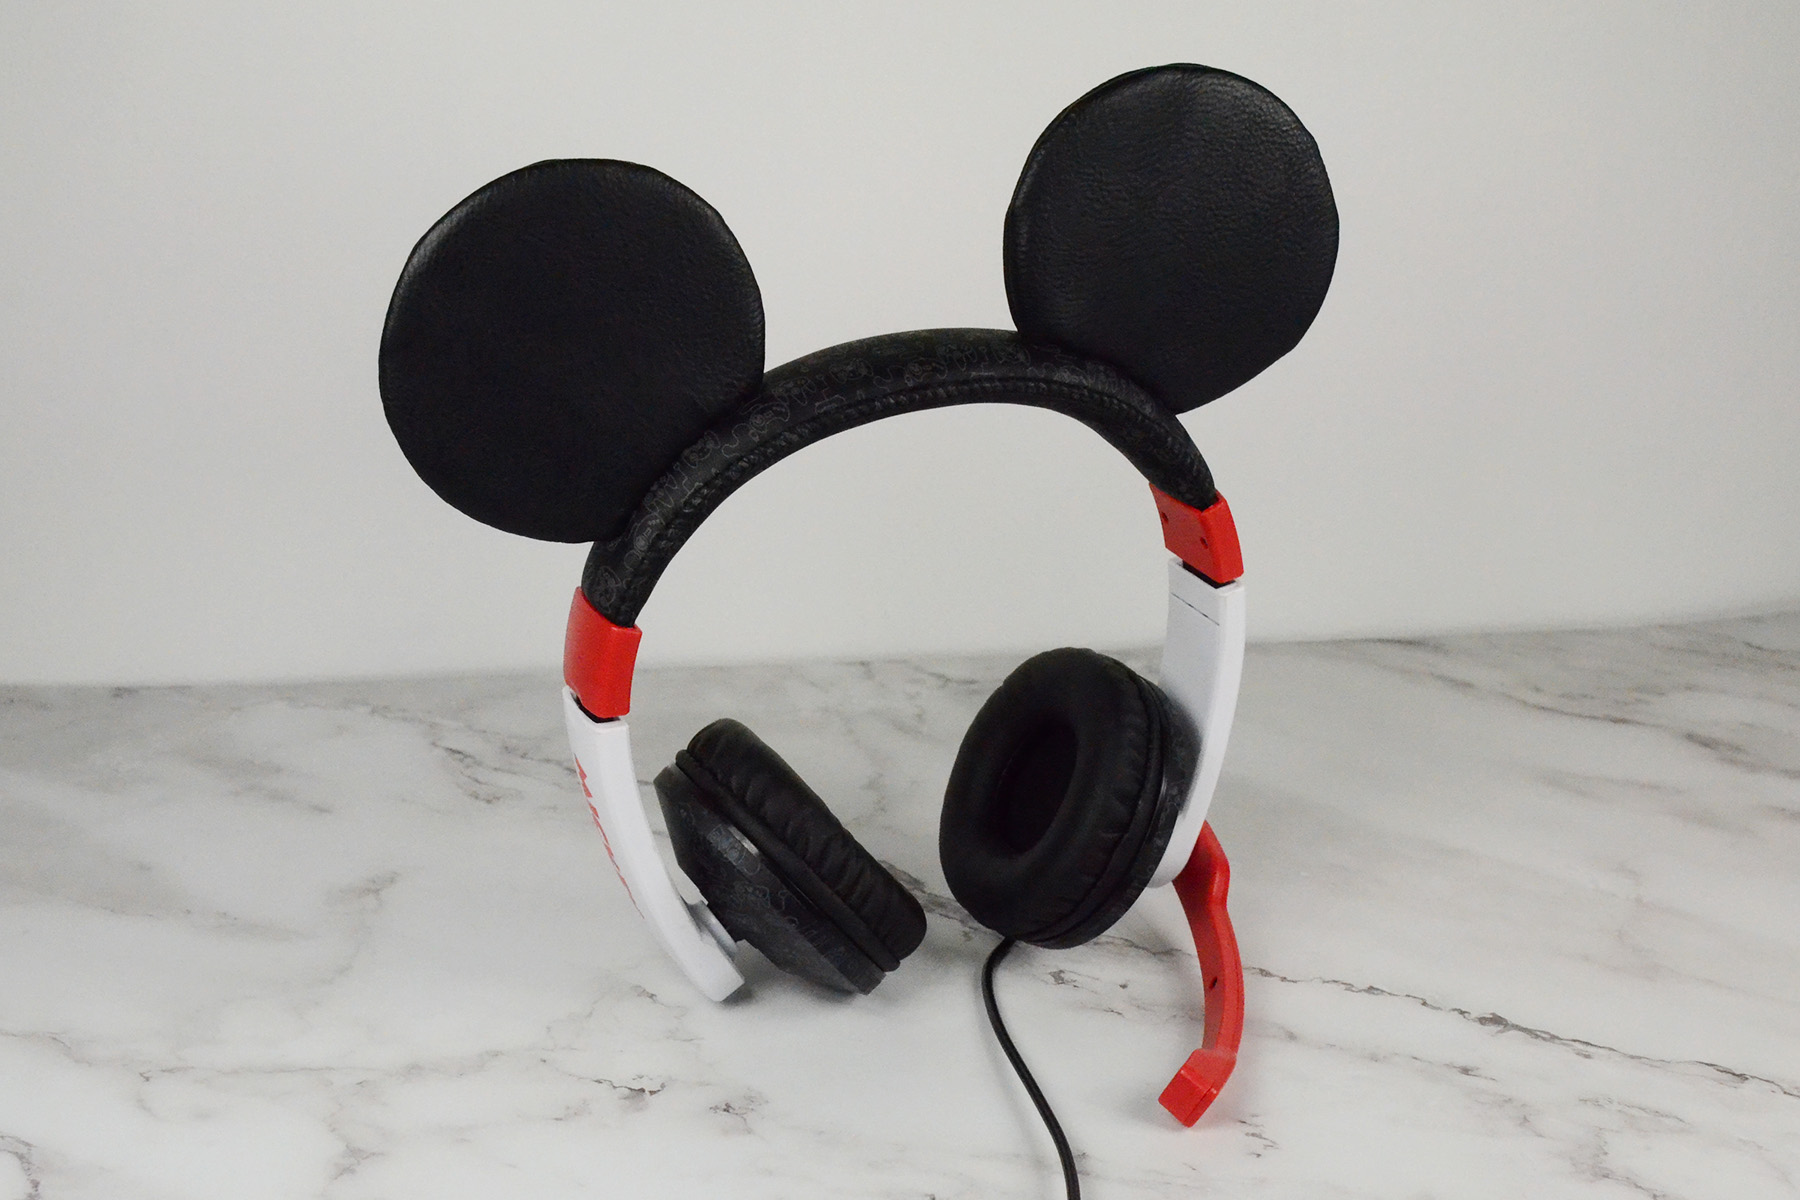 mickey mouse earphones